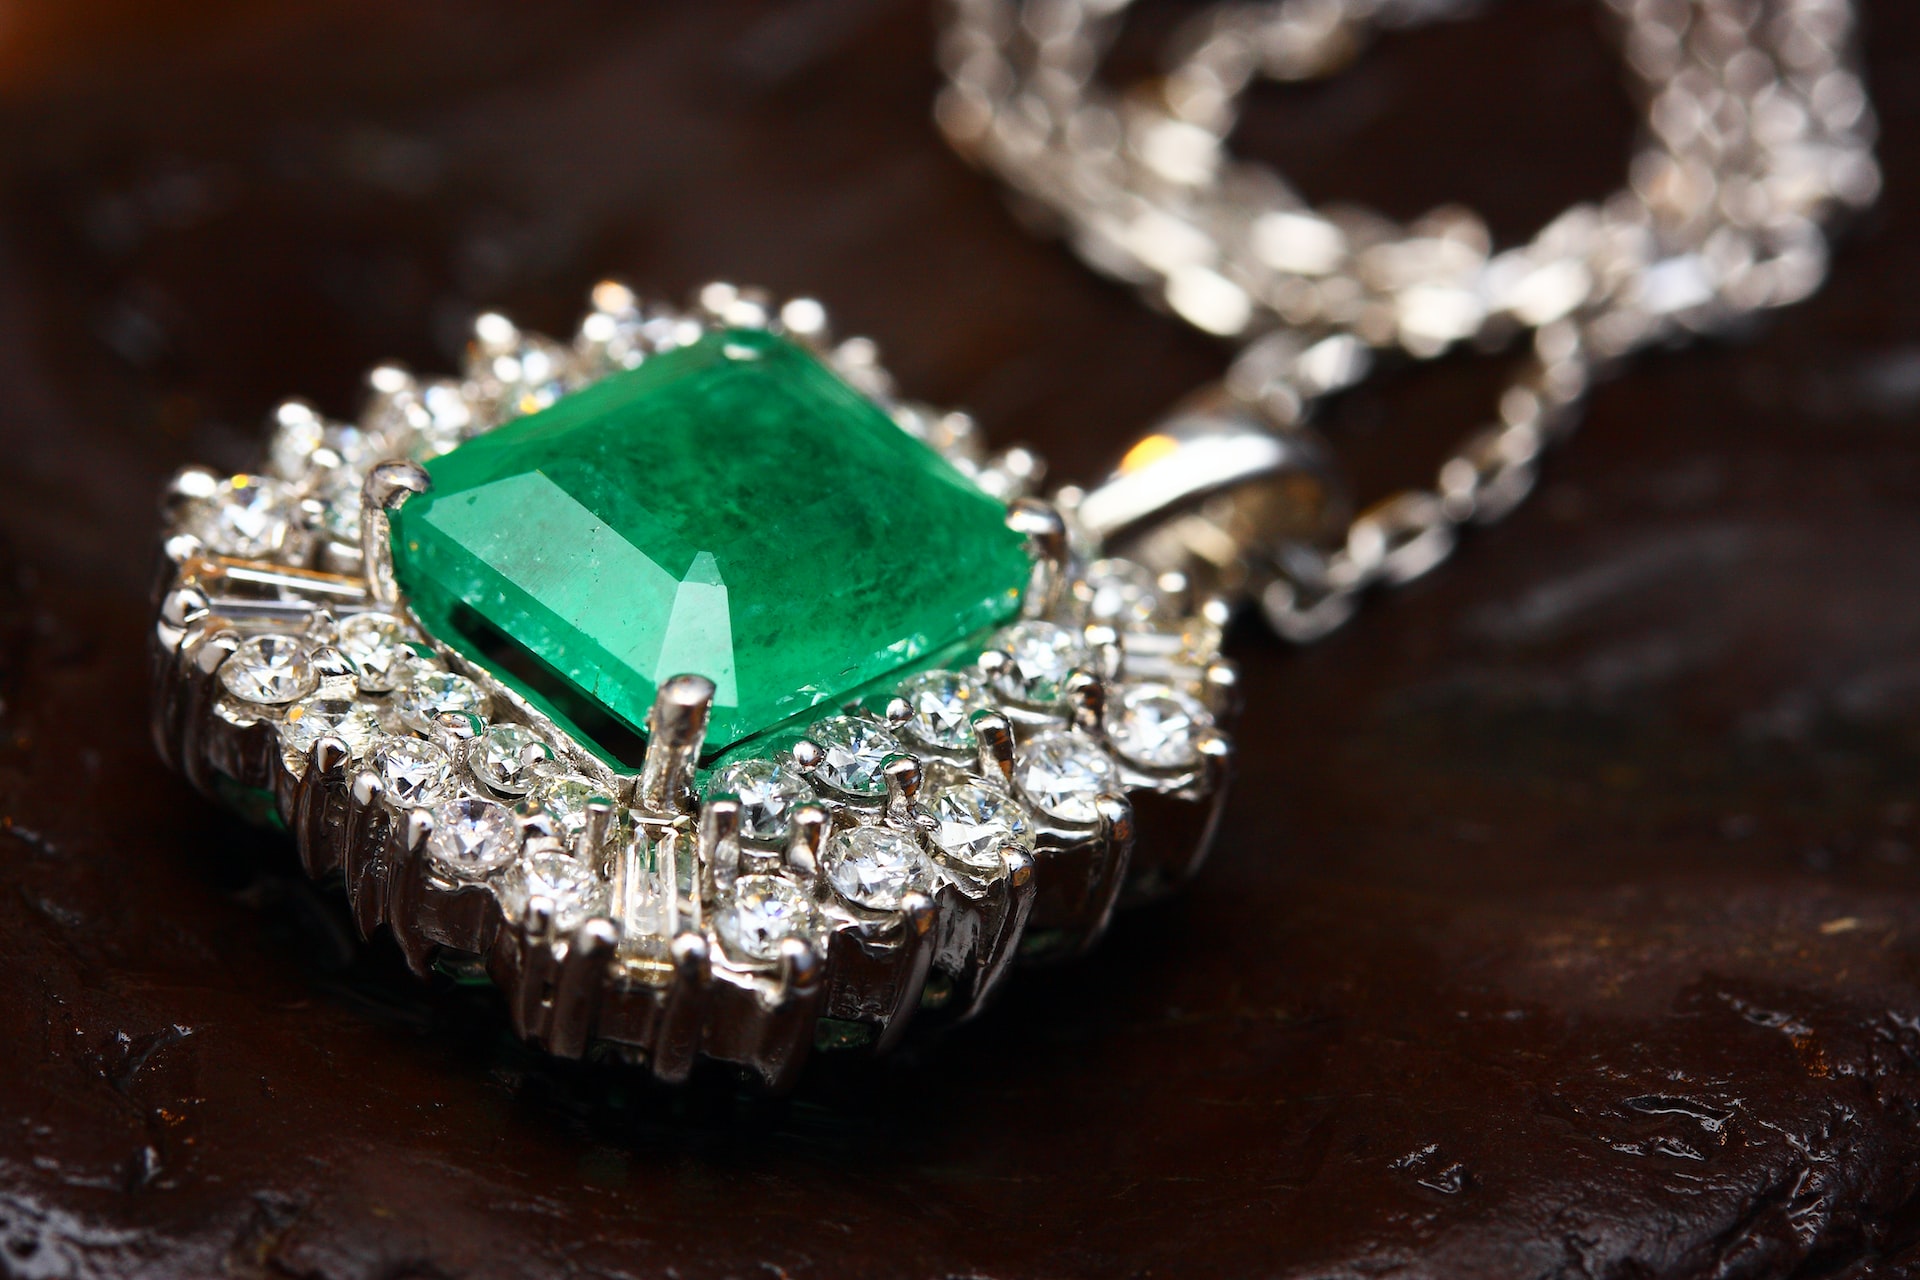 Jewelry with green gemstone